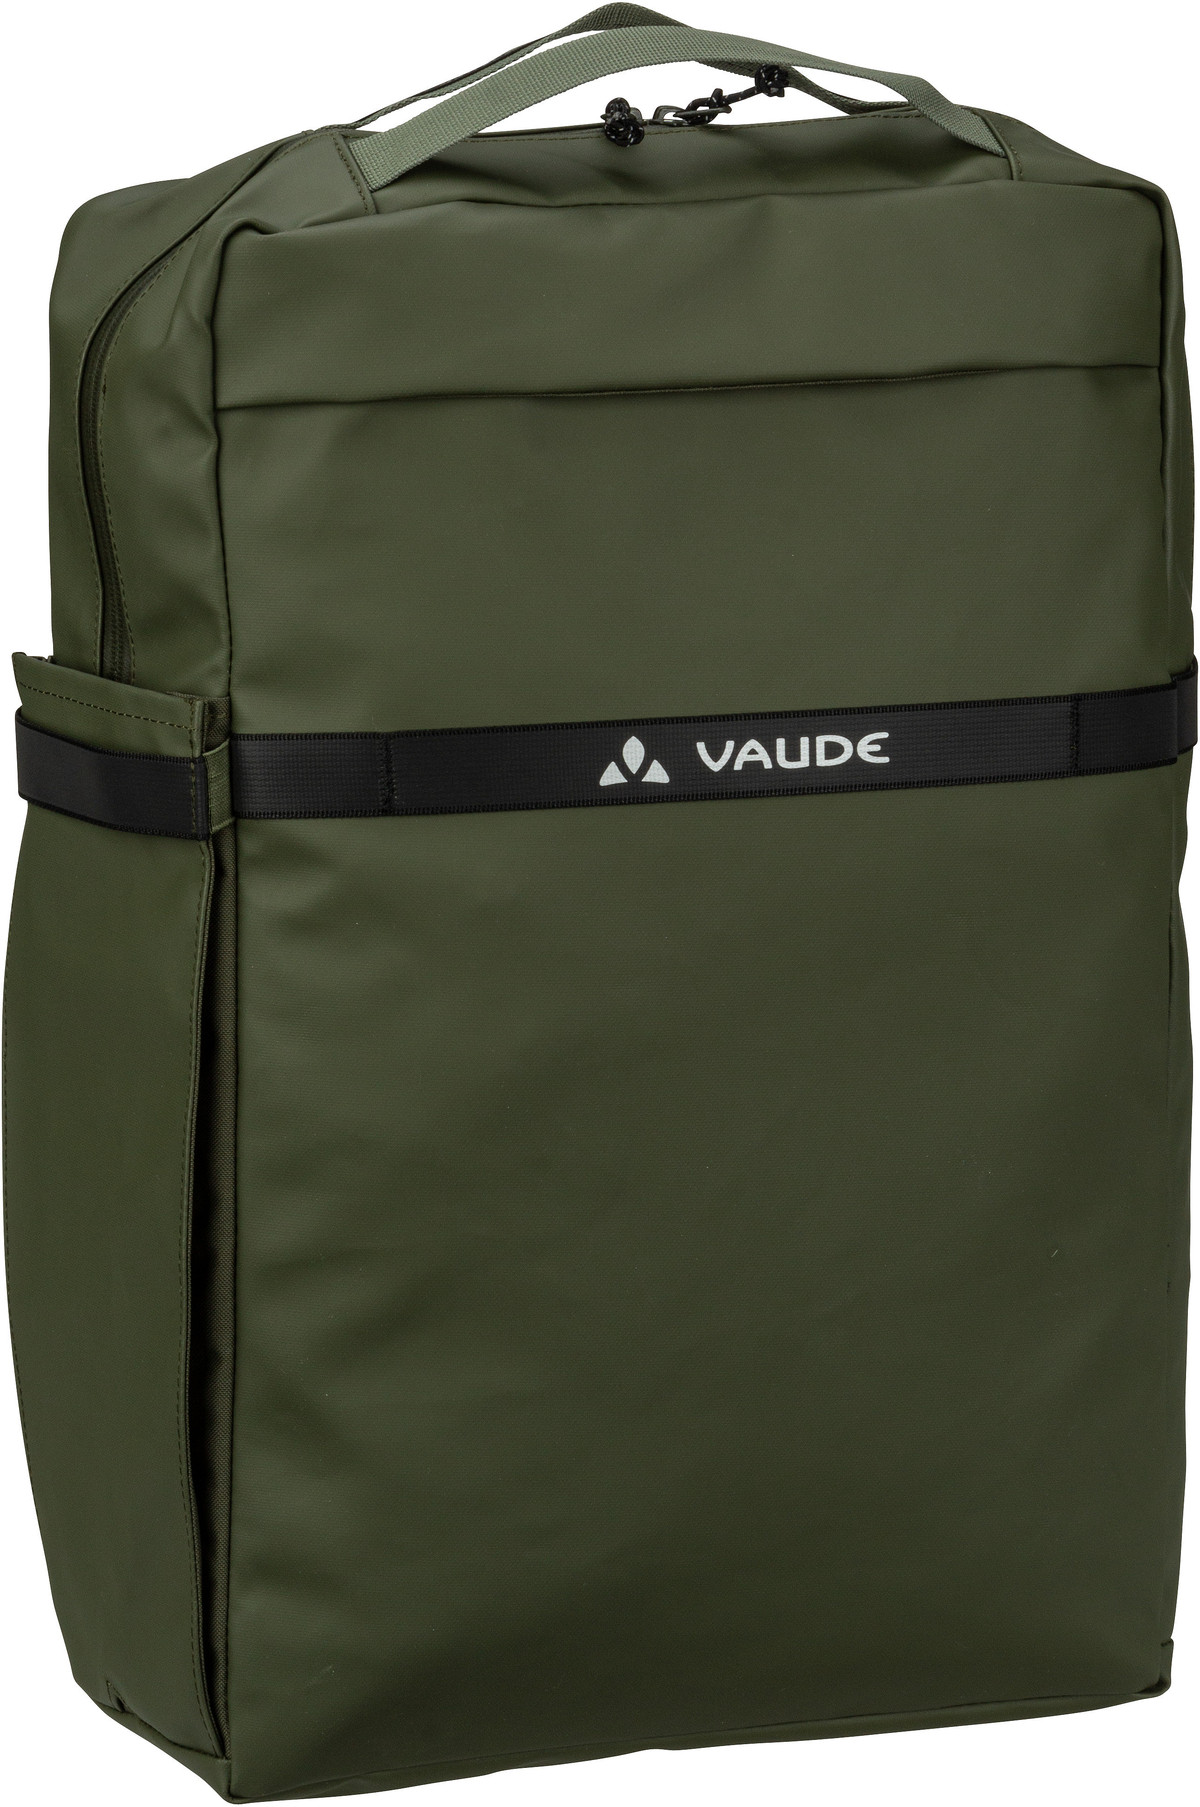 Vaude Mineo Transformer Backpack 20 - Khaki